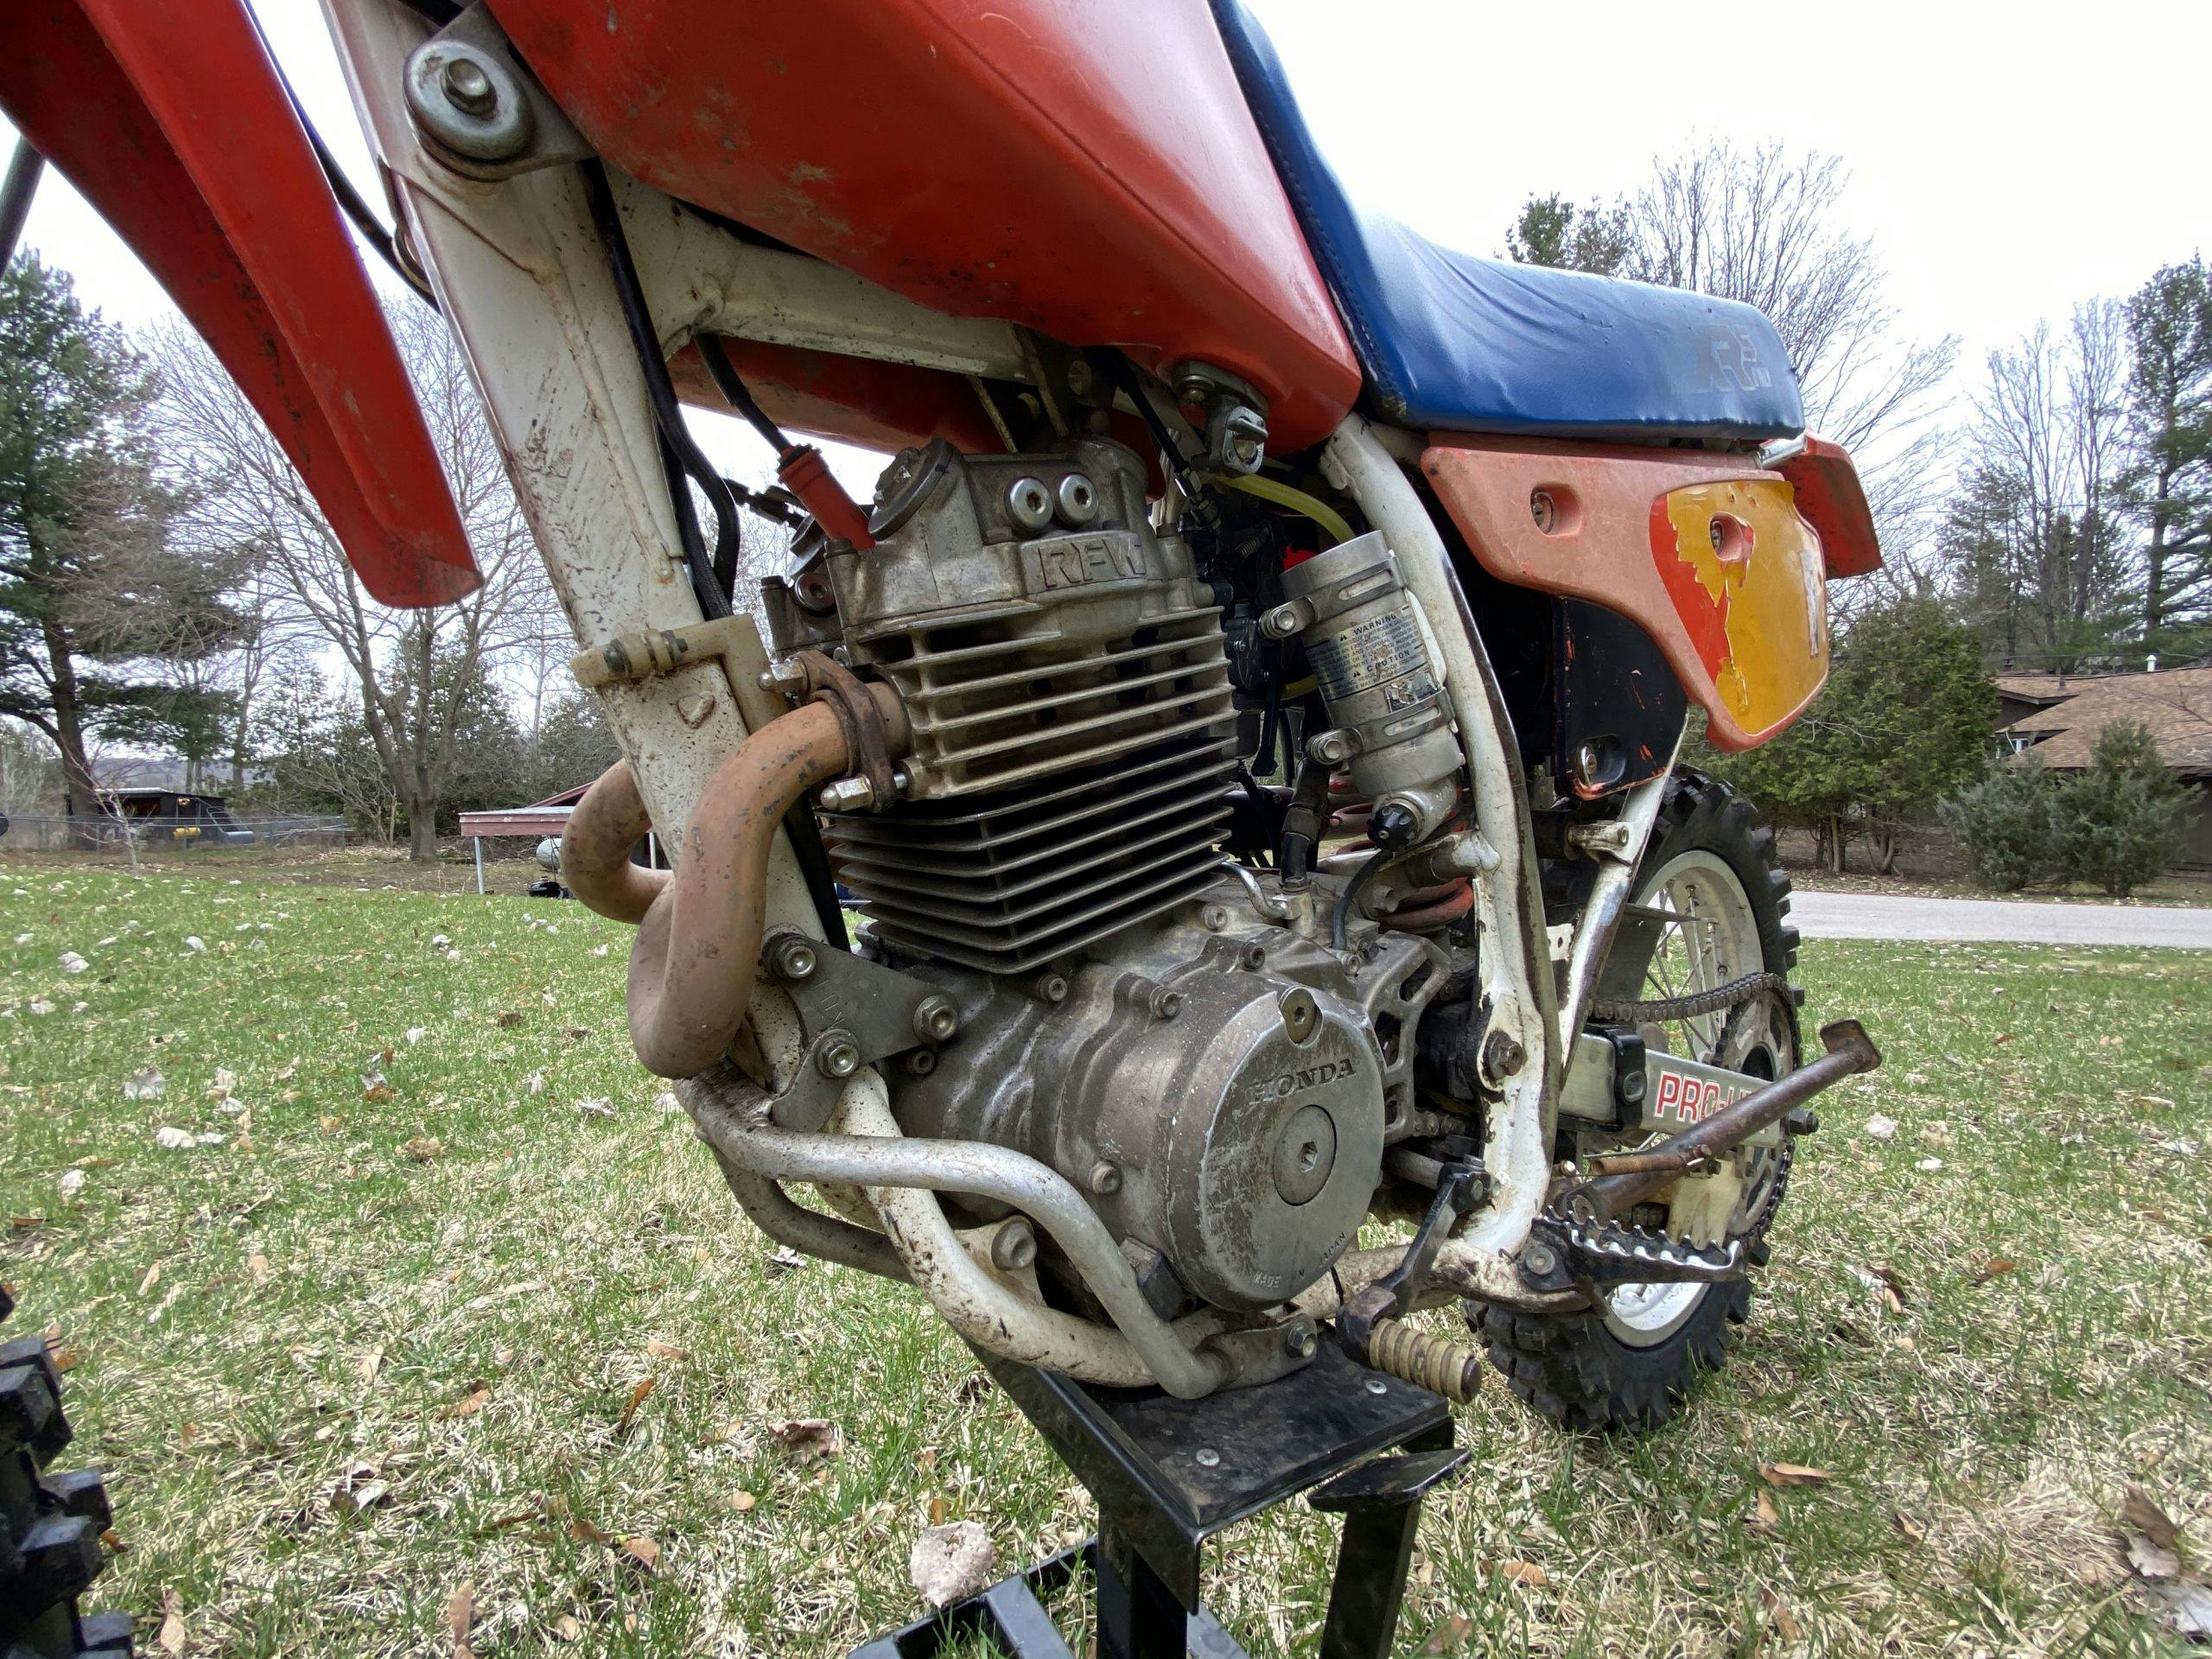 Honda Xr250 side engine